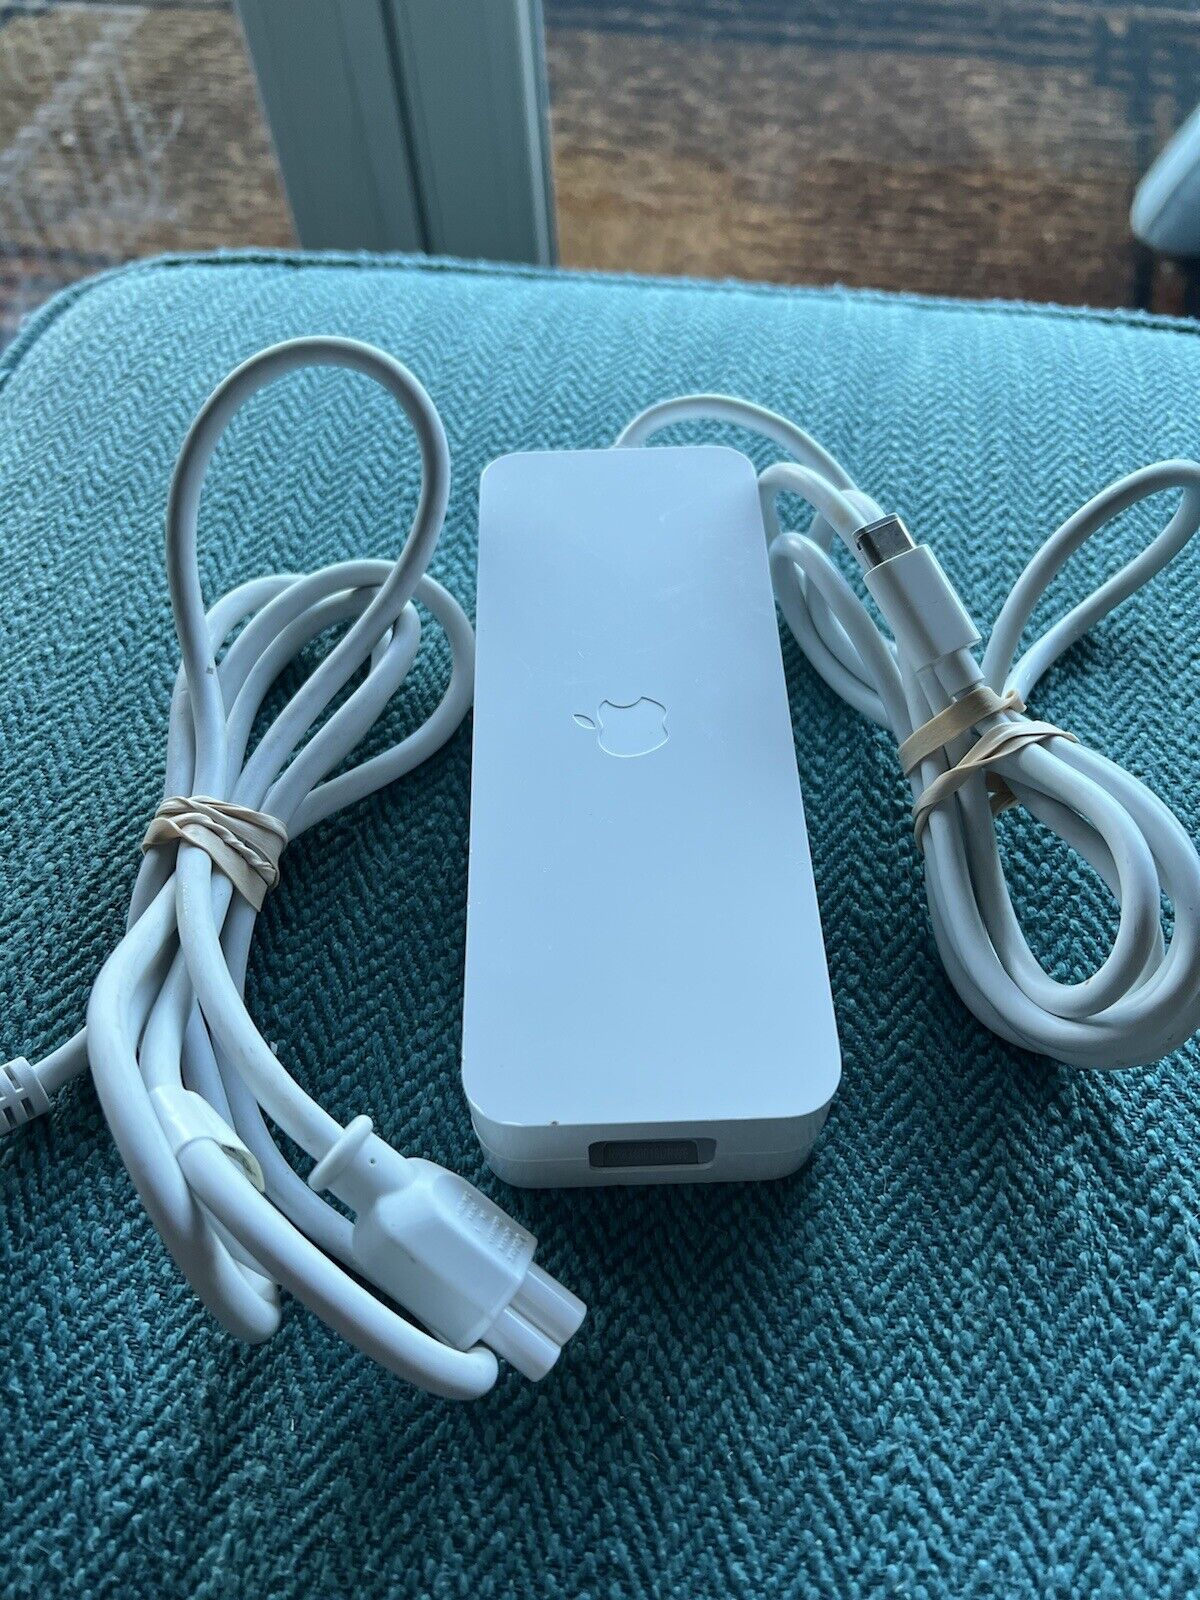 Apple Mac Mini 1 10W Power Adapter (A1188) - White